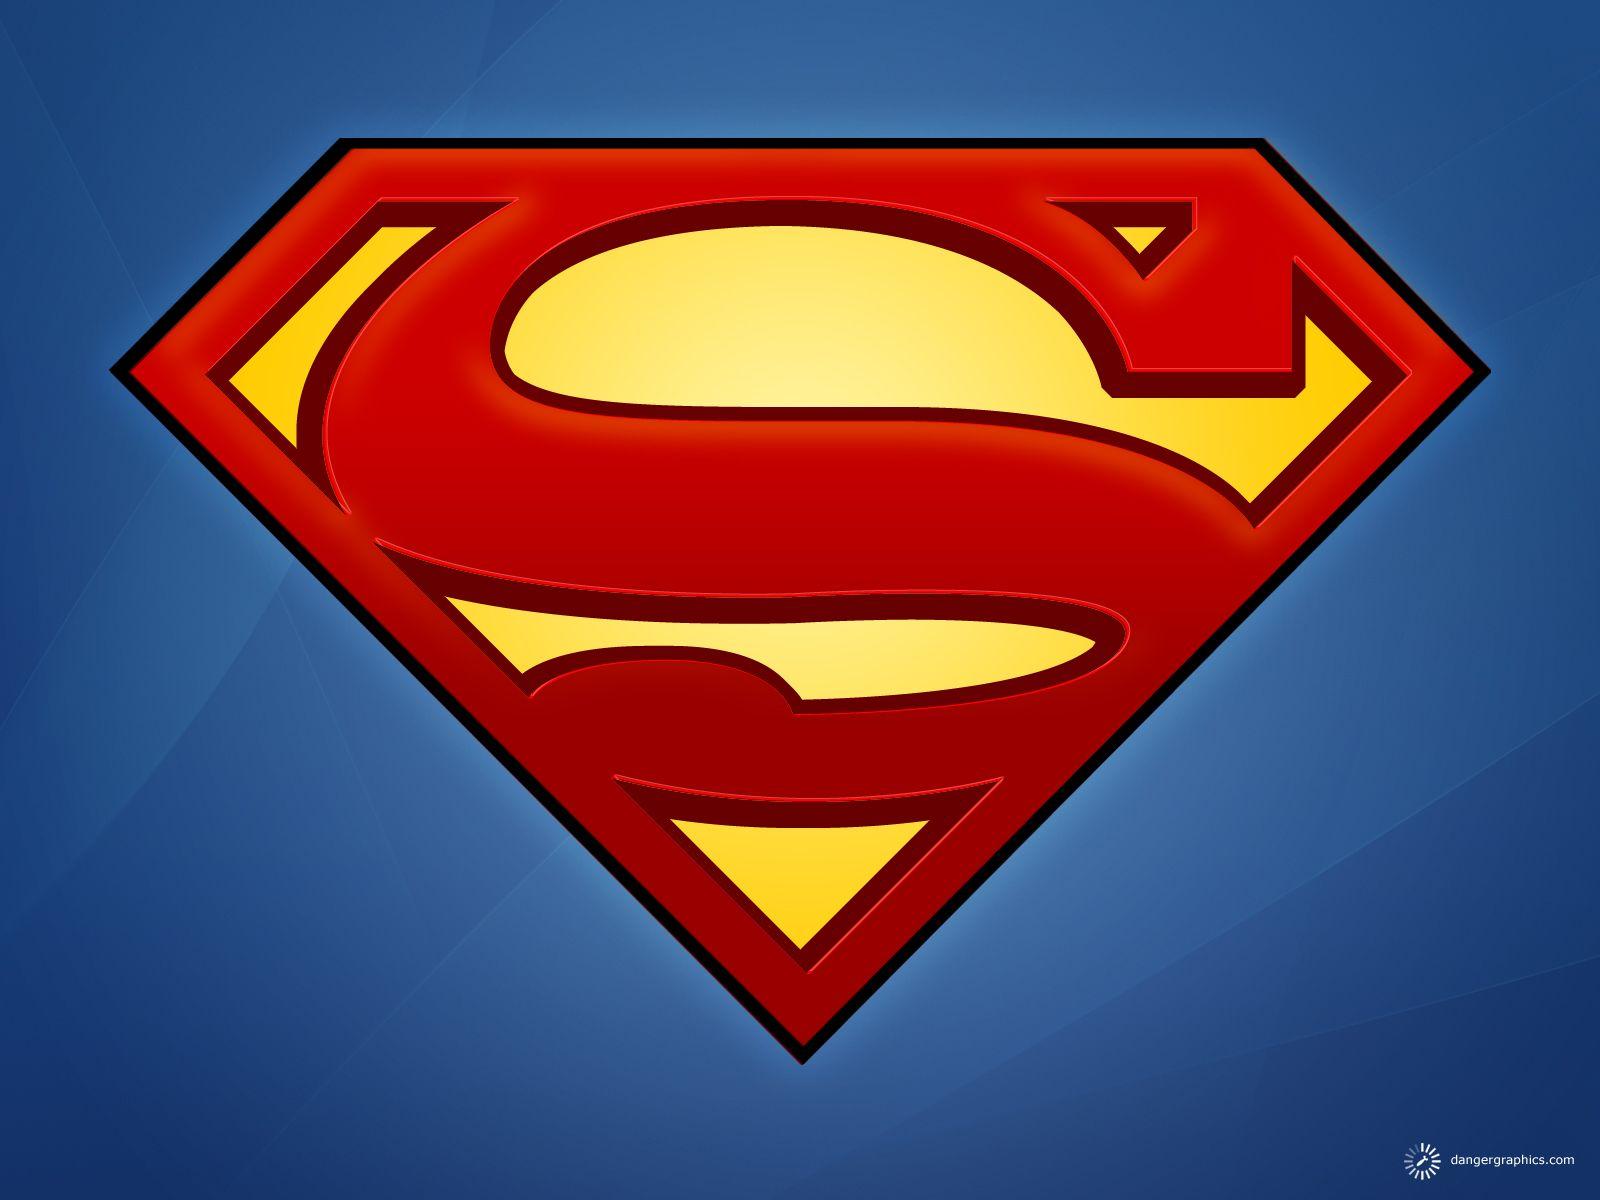 Superman Logo Wallpaper, HDQ Superman Logo Image Collection